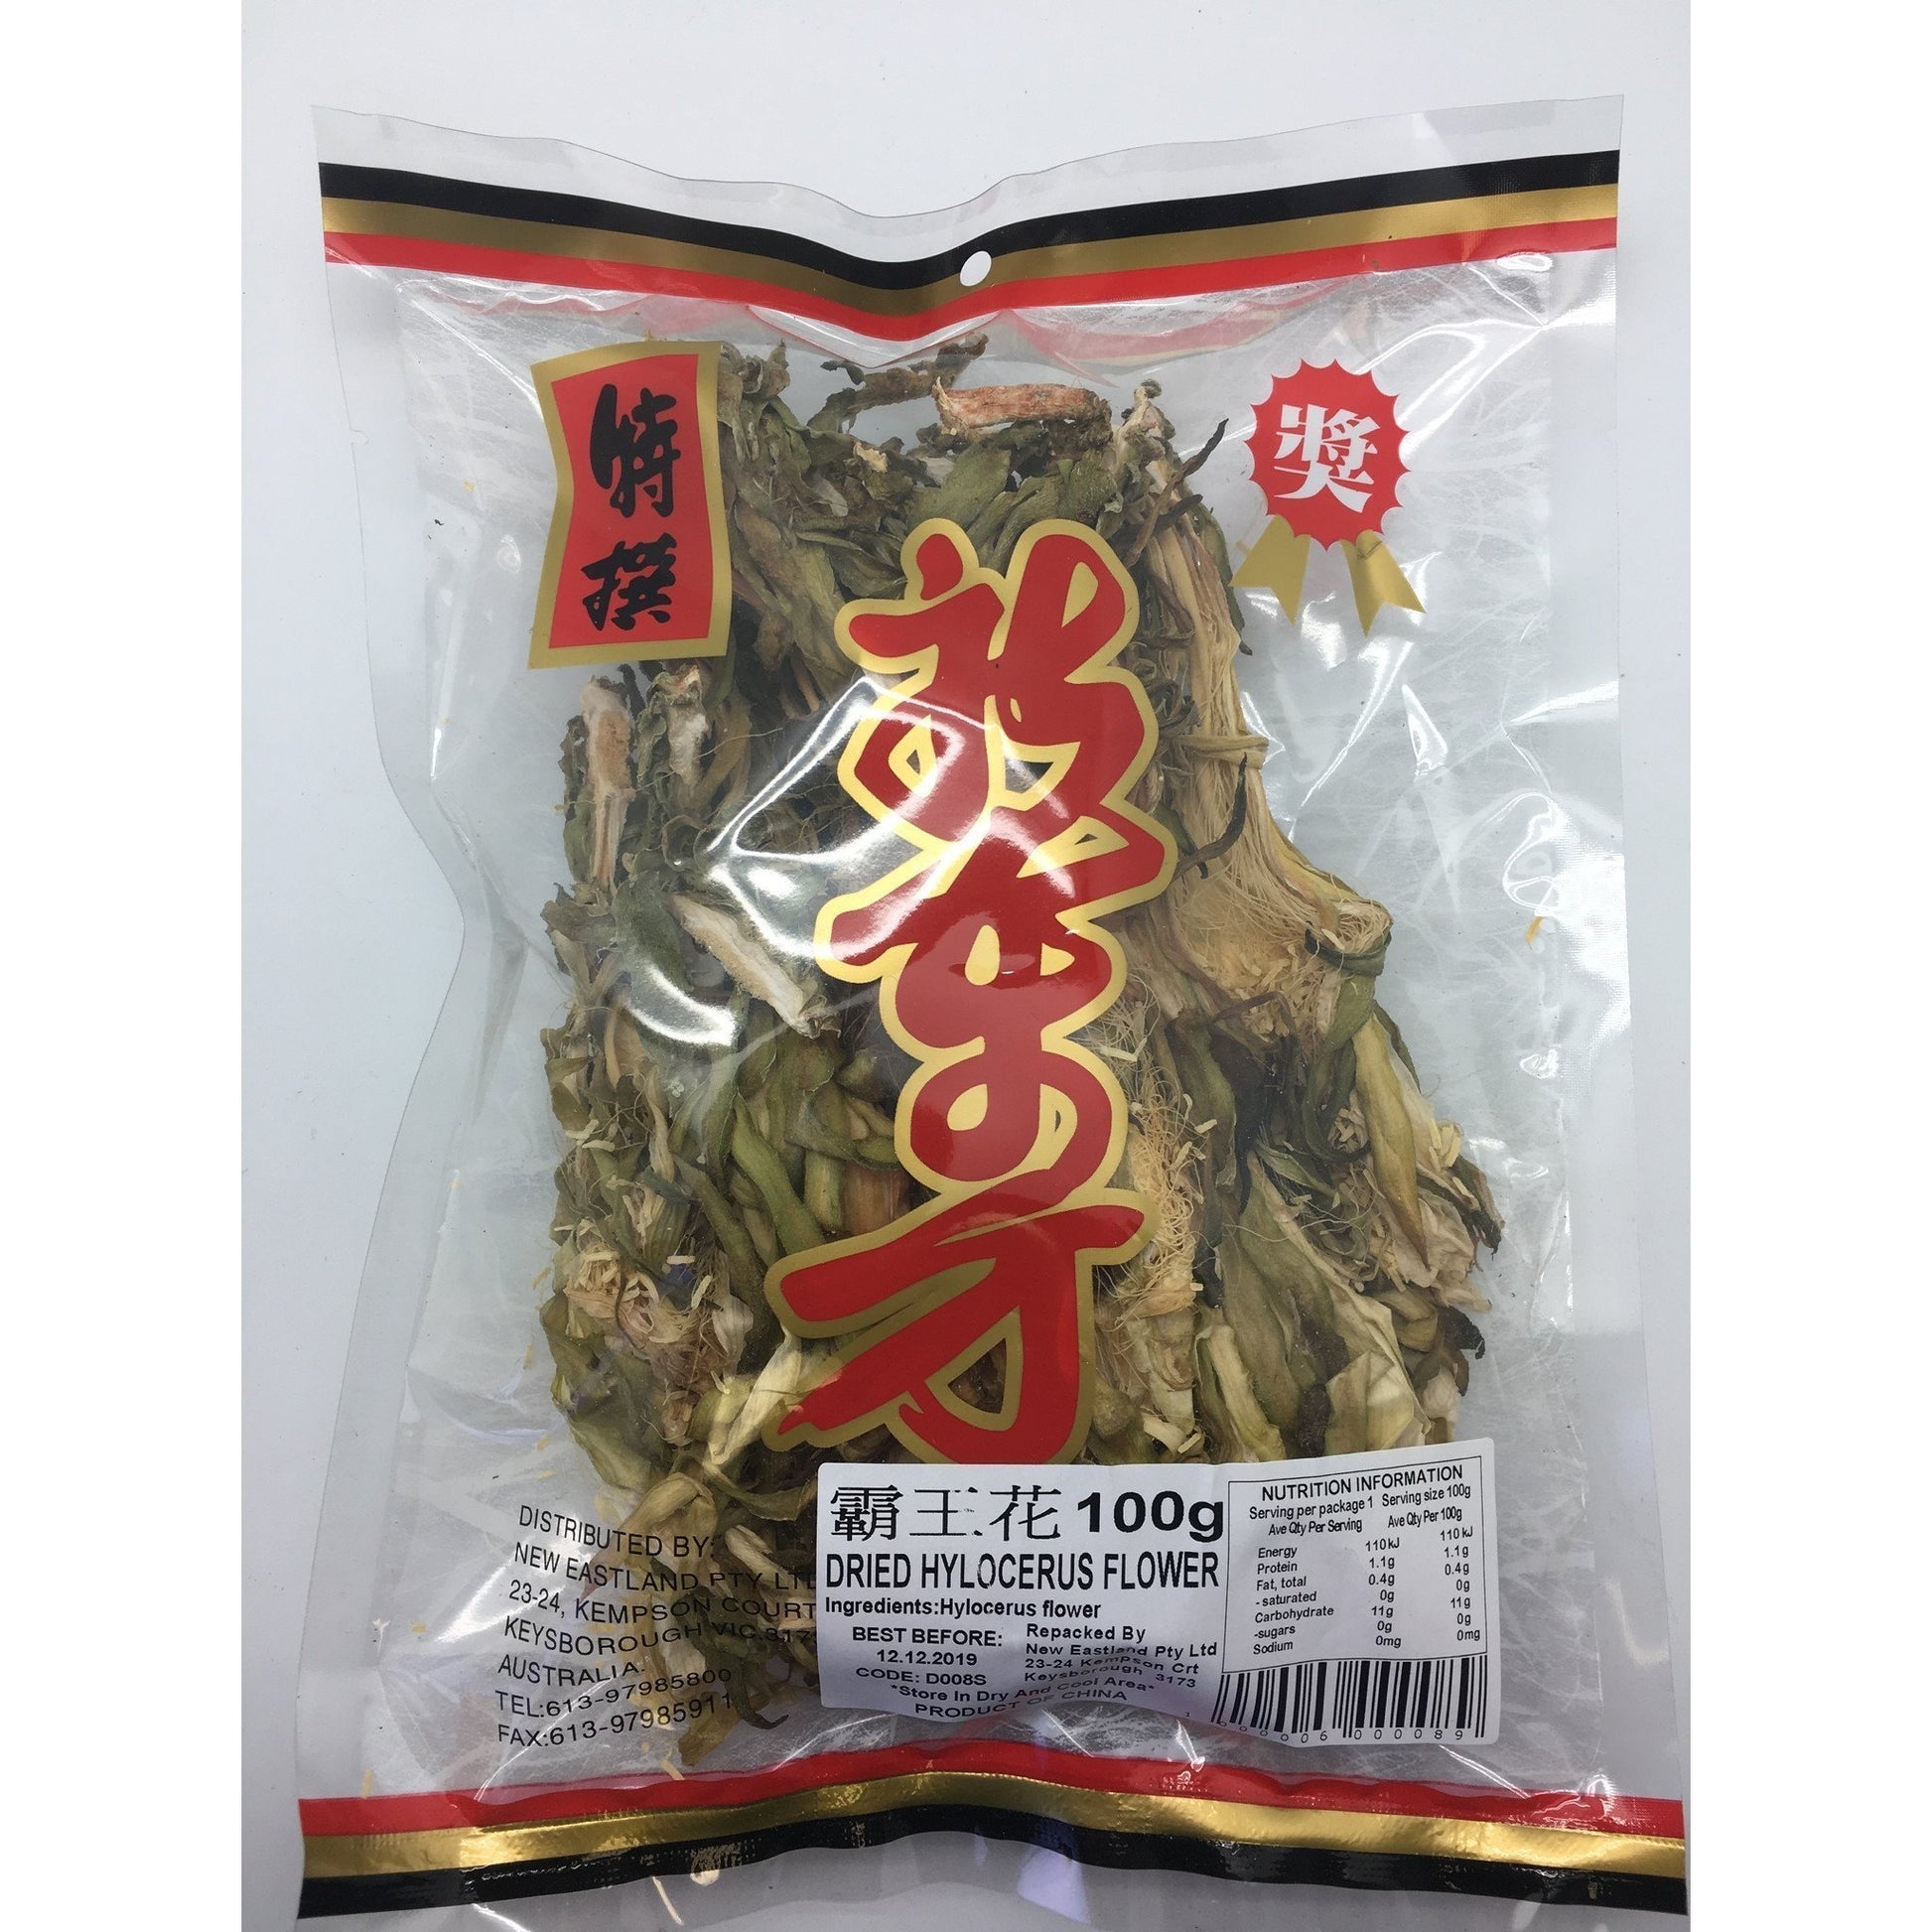 D008S New Eastland Pty Ltd - Dried Hylocerus Flower 100g - 50 bags / 1CTN - New Eastland Pty Ltd - Asian food wholesalers